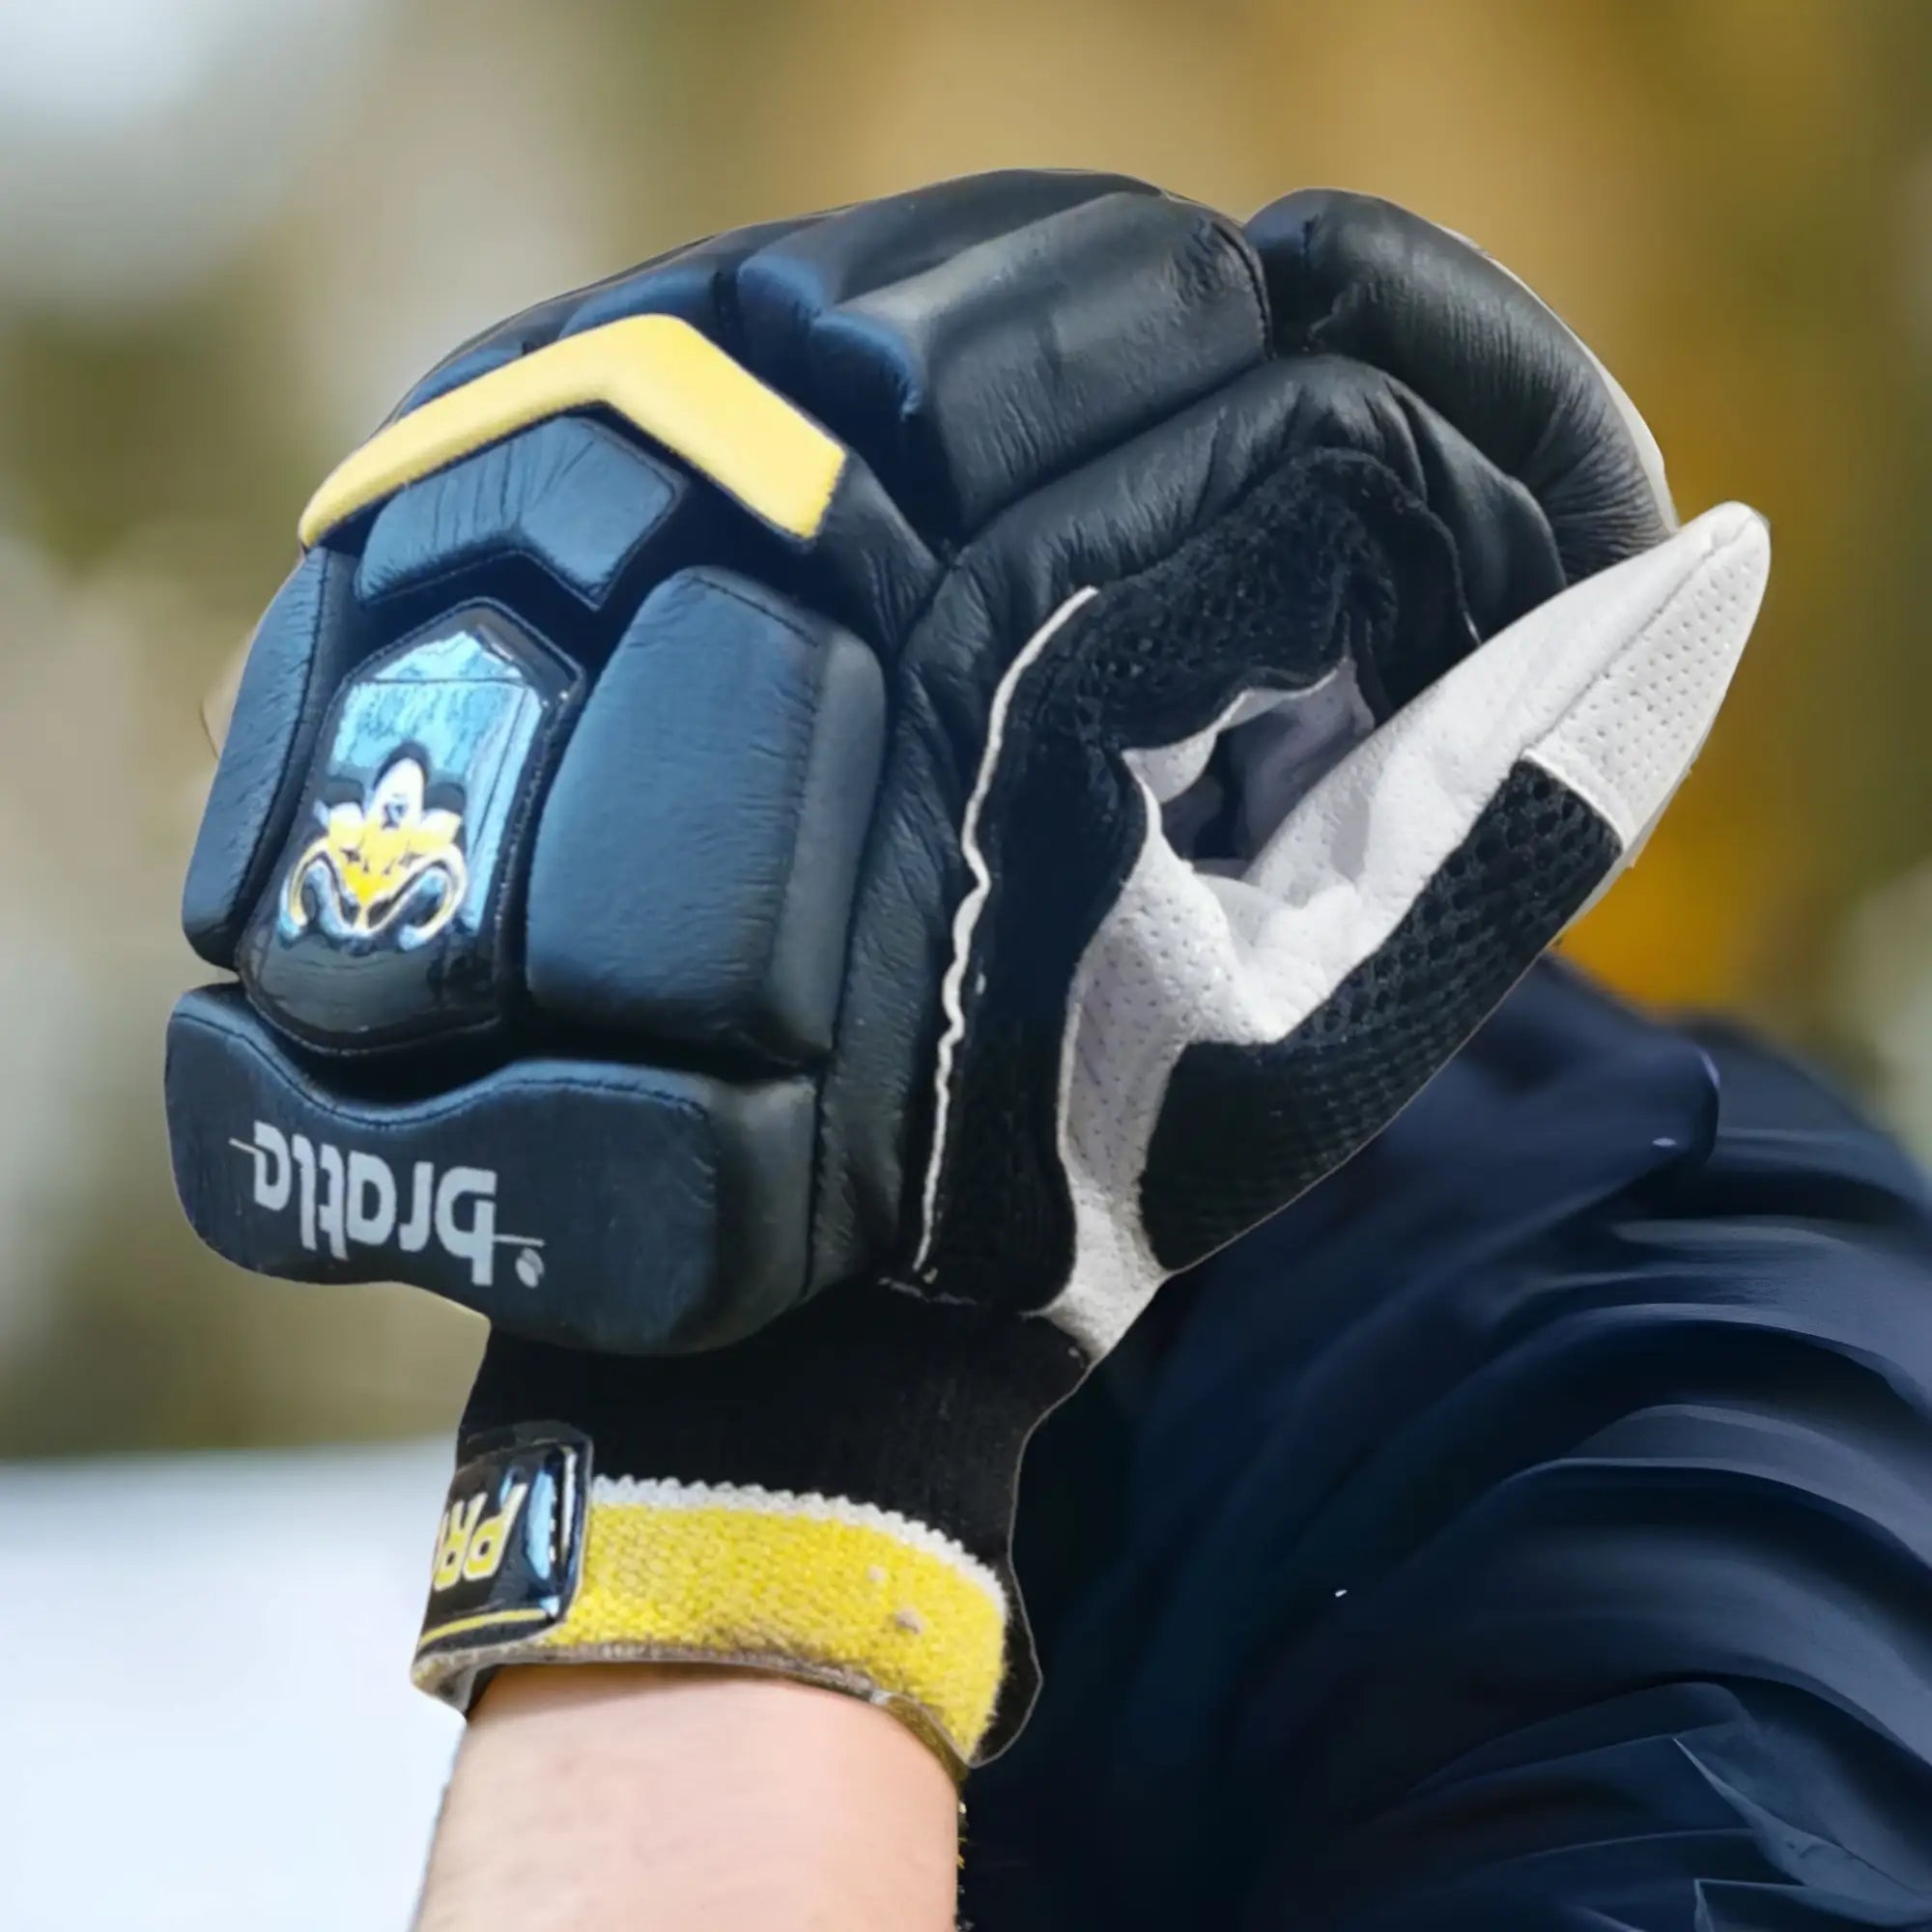 Bratla Pro Cricket Batting Gloves - GLOVE - BATTING